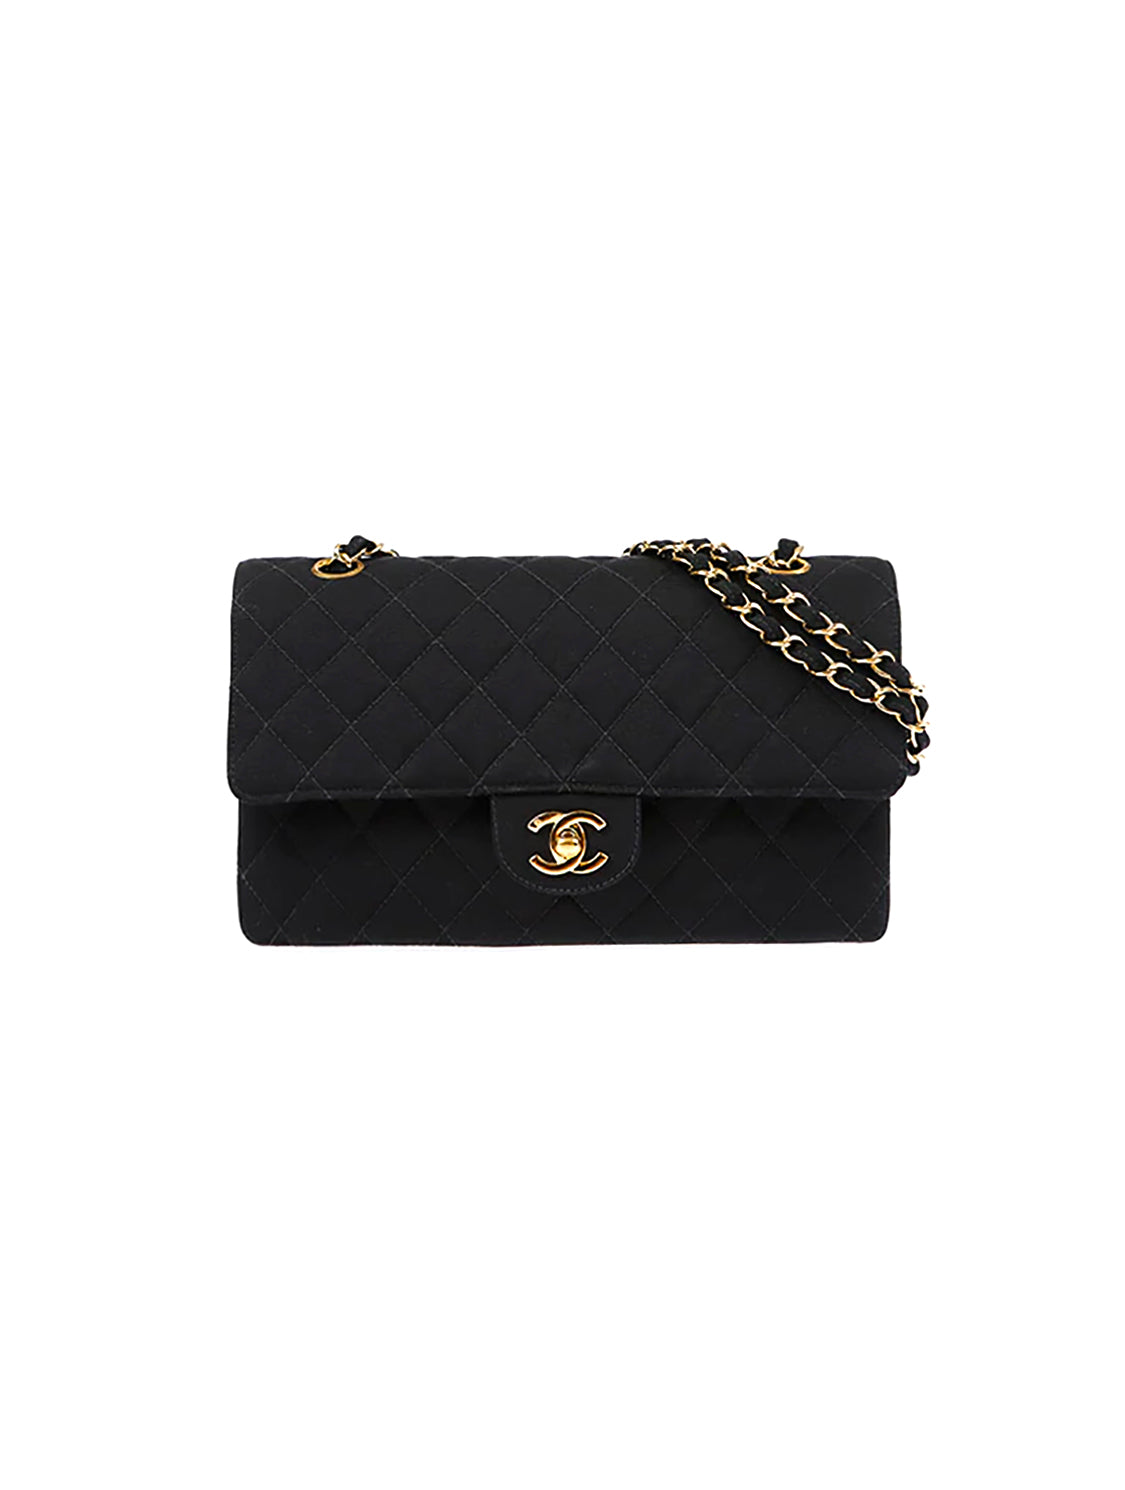 Chanel 2000s Black Cloth Leather Flap Bag